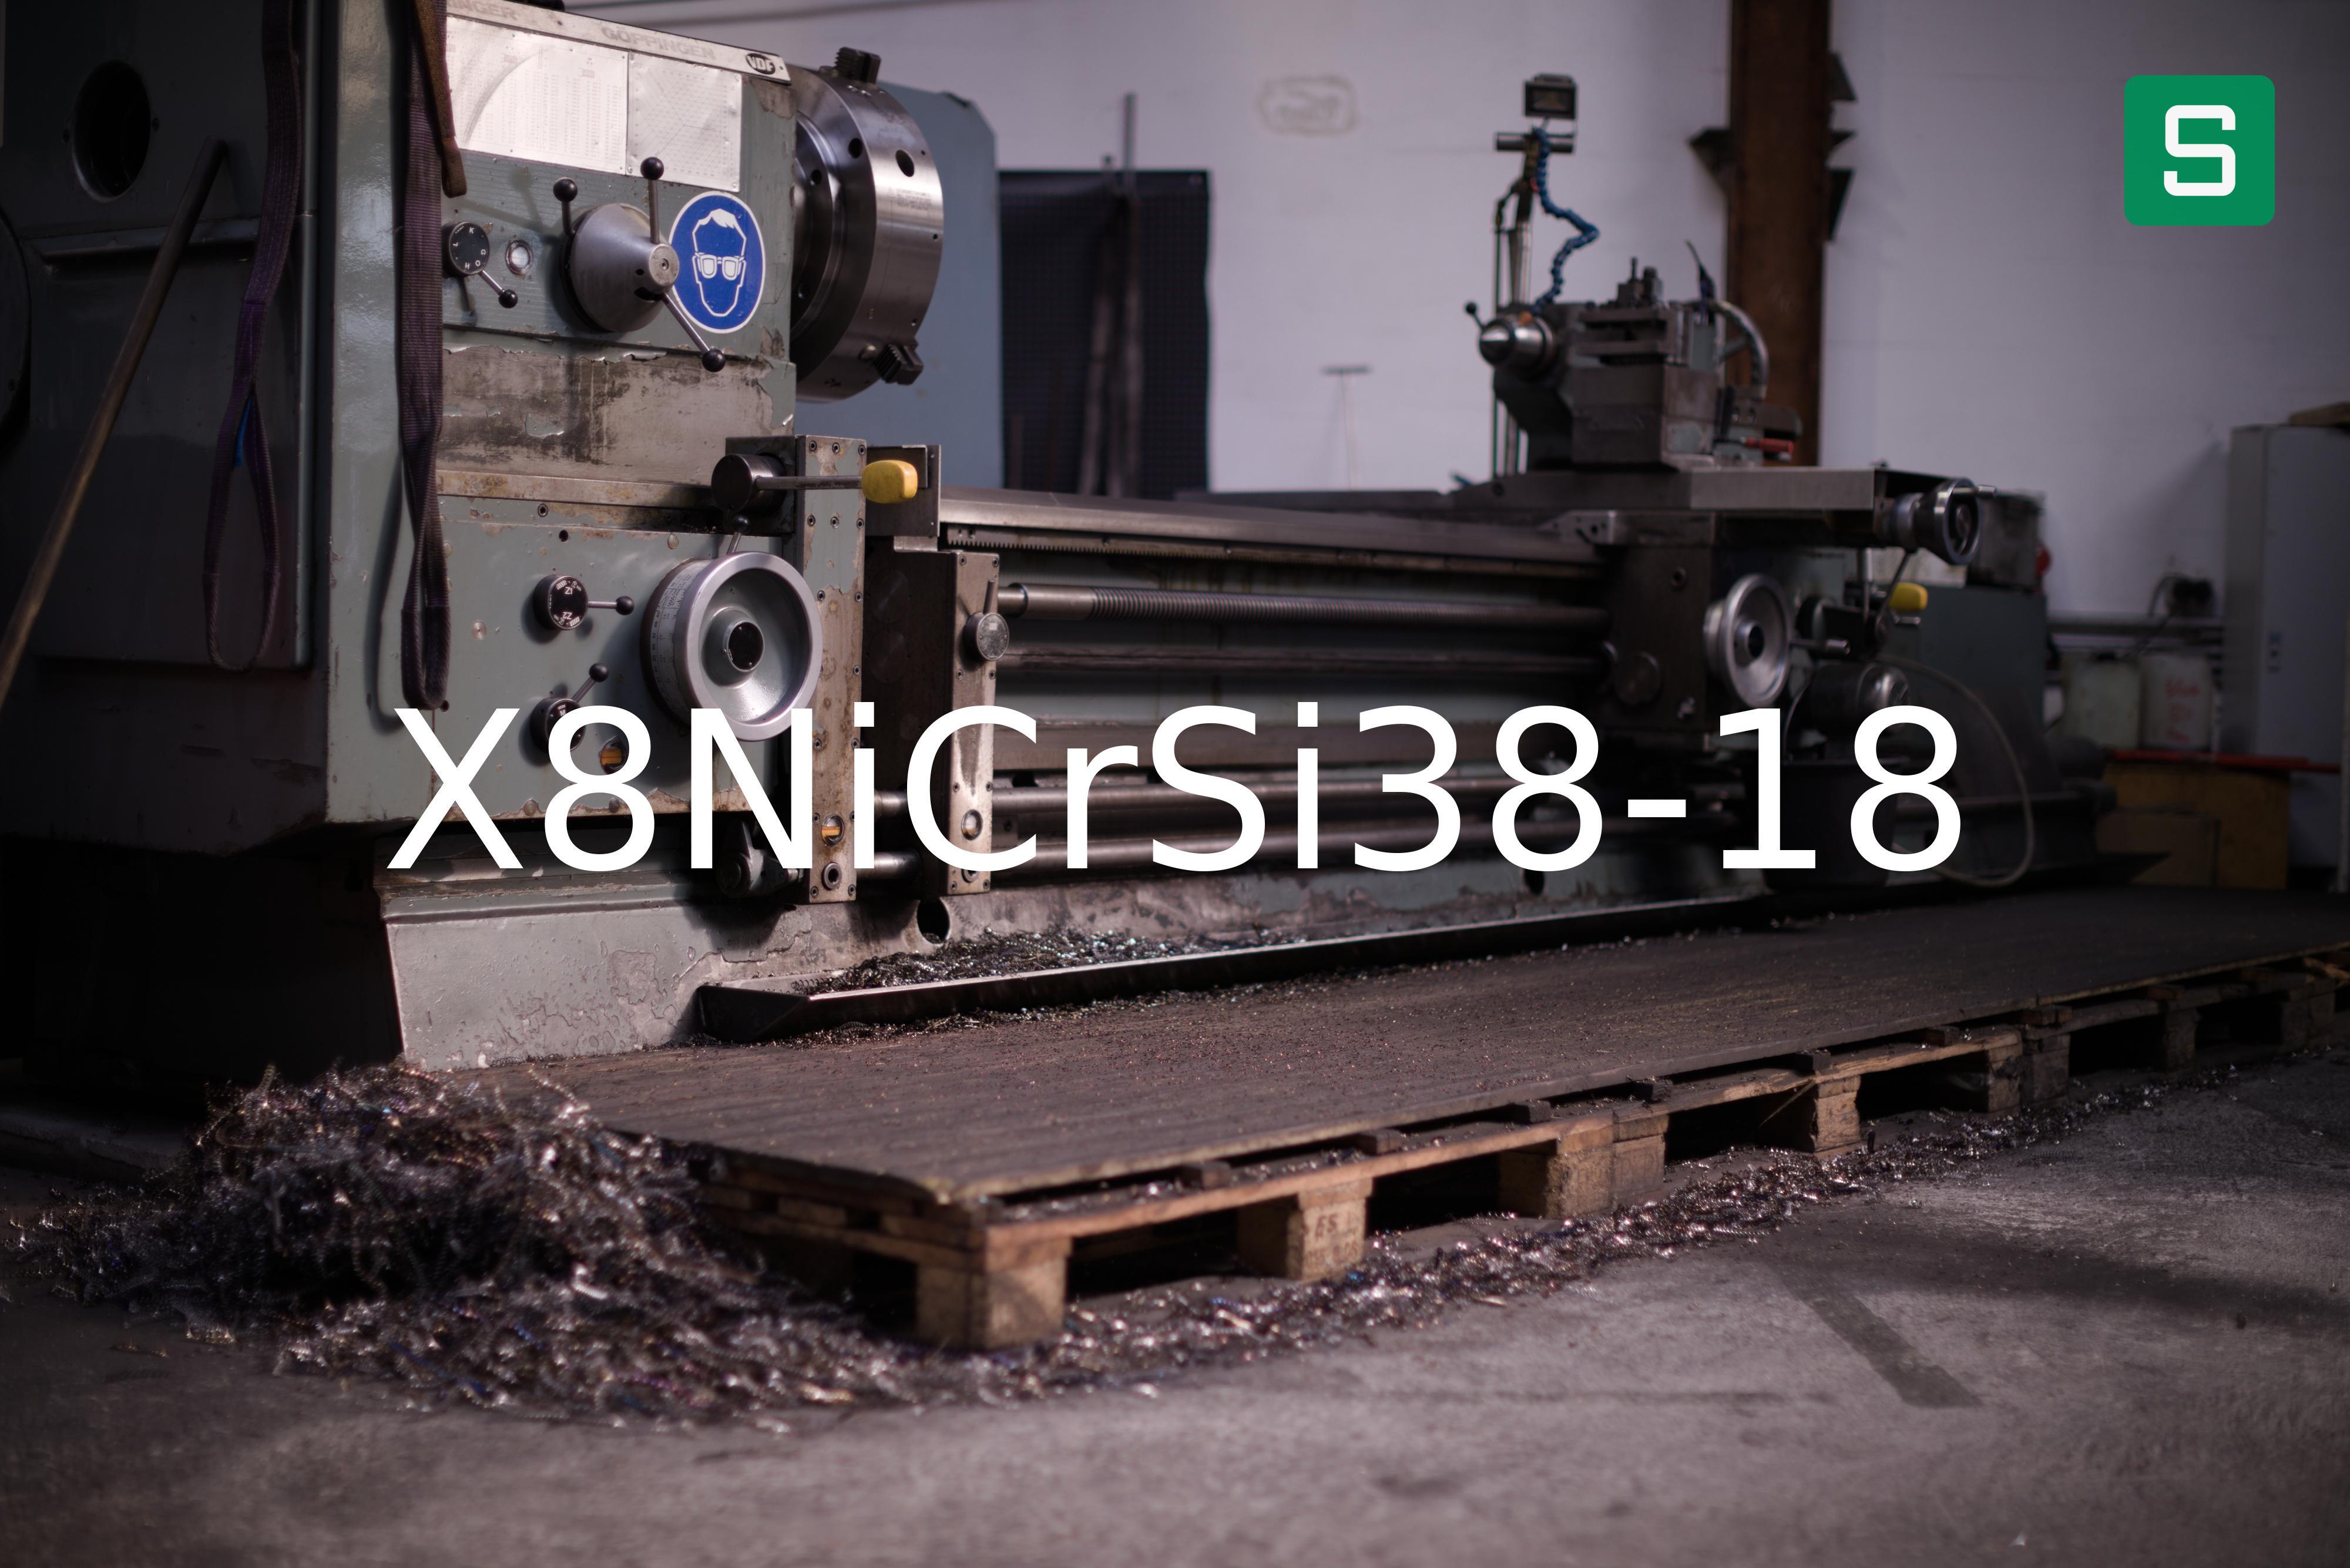 Stahlwerkstoff: X8NiCrSi38-18